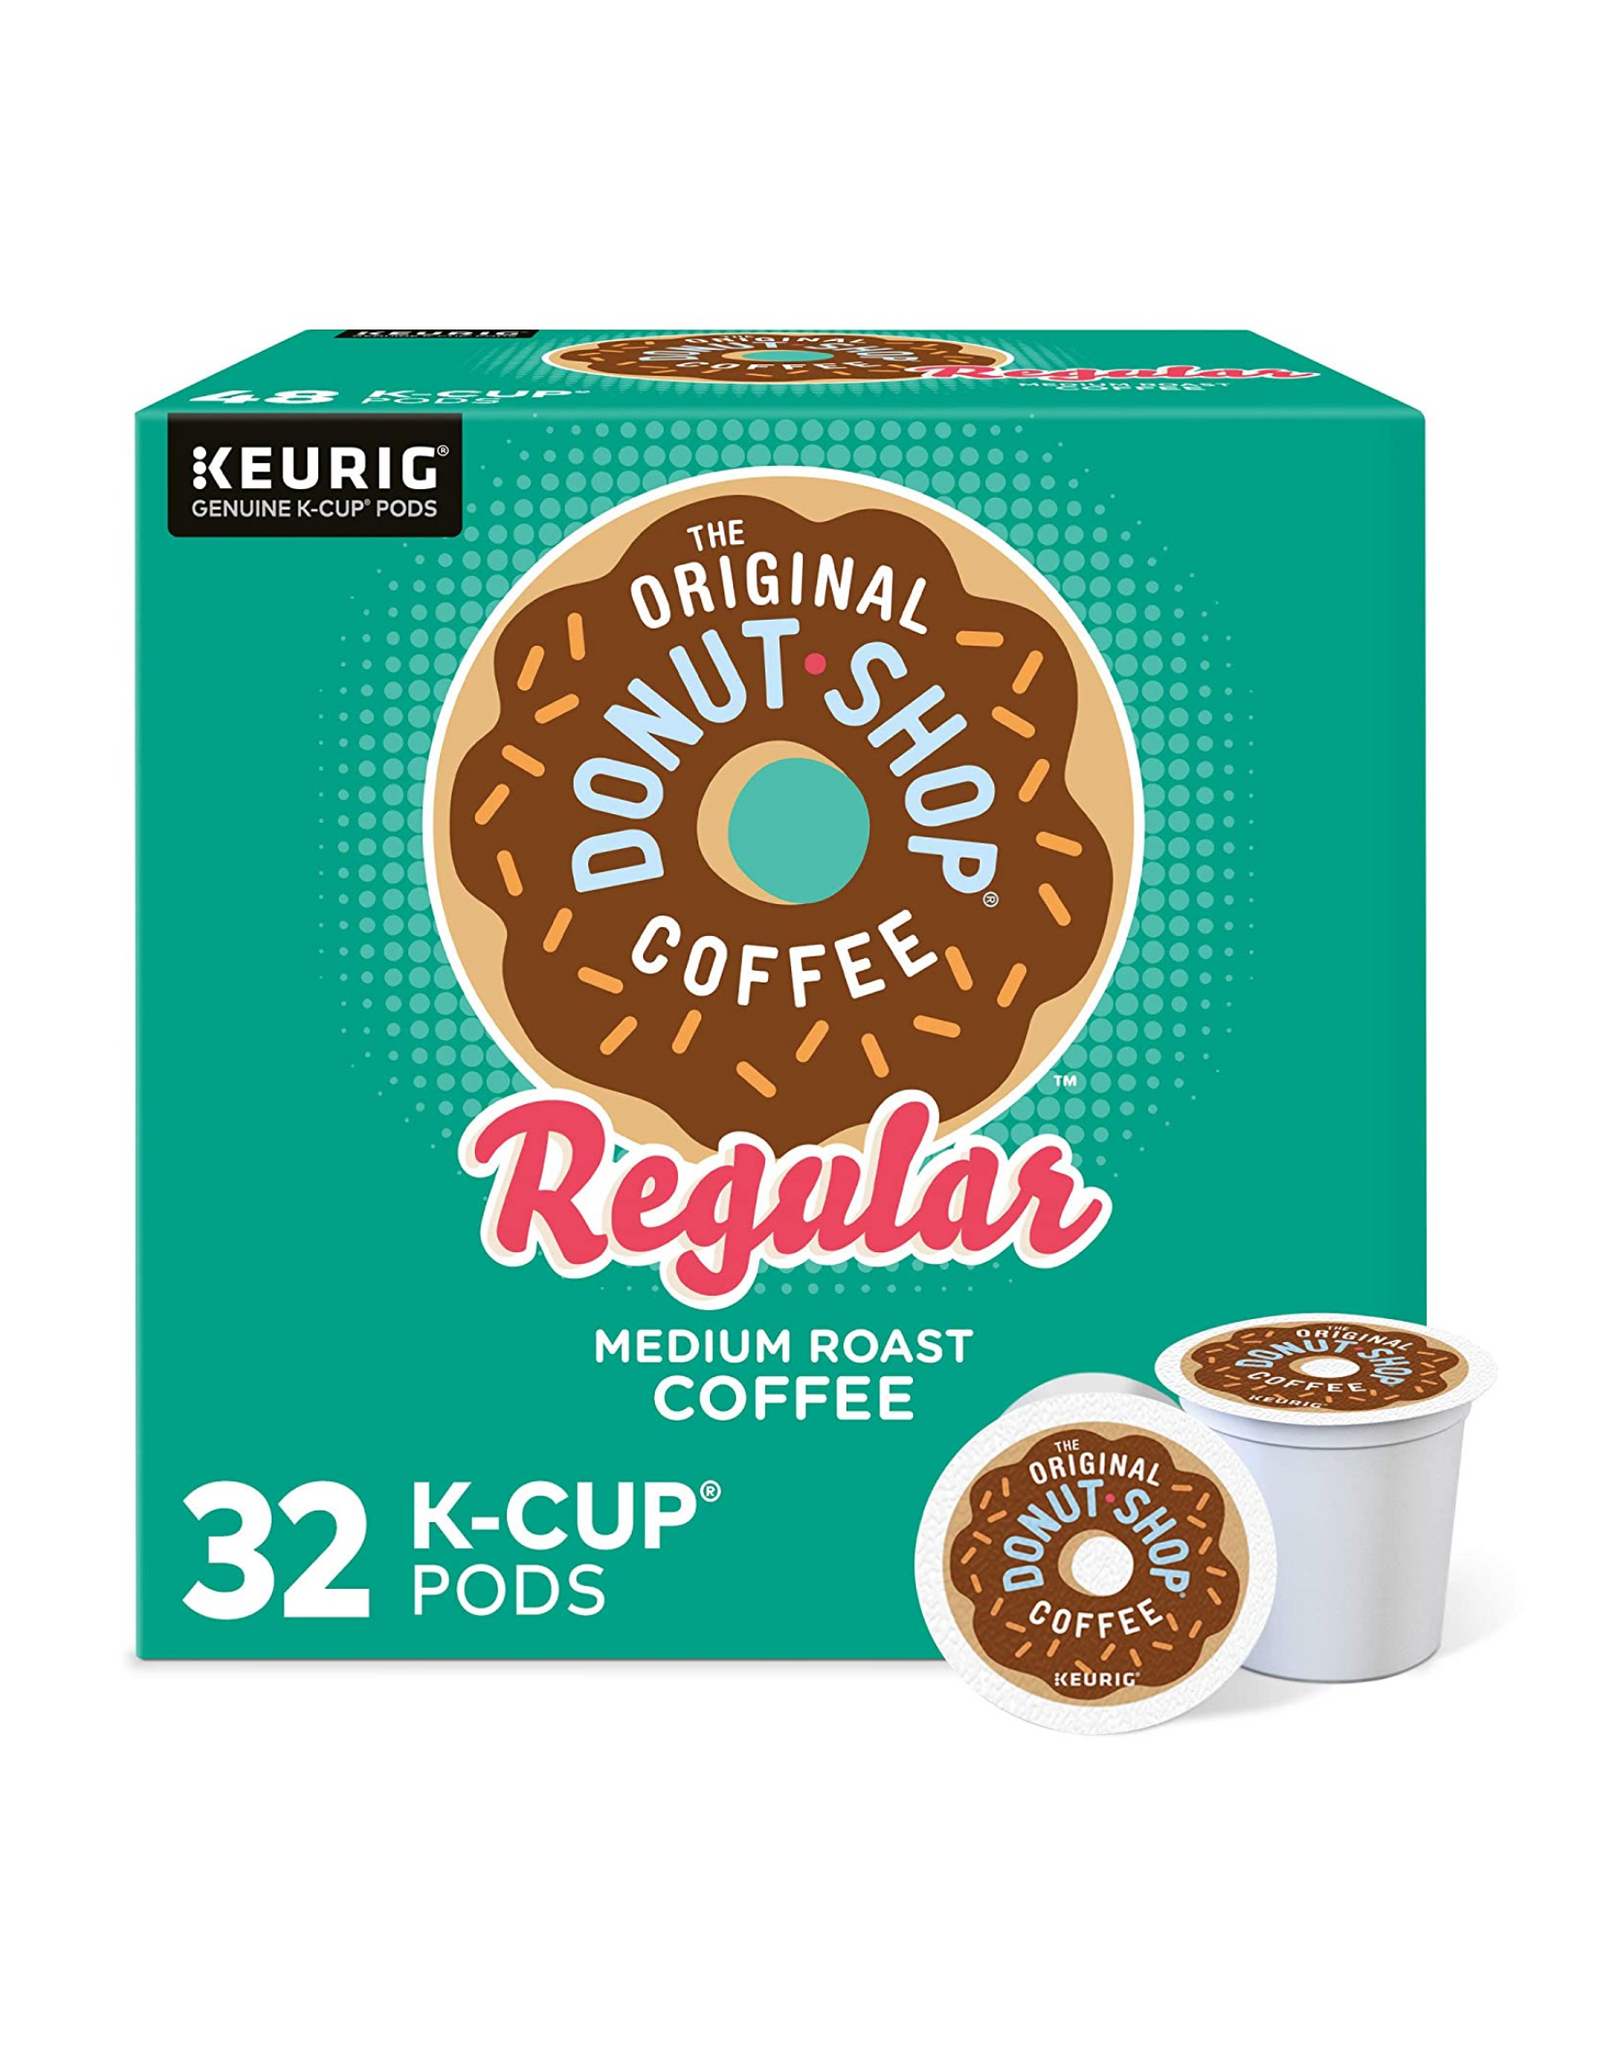 The Original Donut Shop Regular K-Cup Pods, Medium Roast Coffee, 32 Count